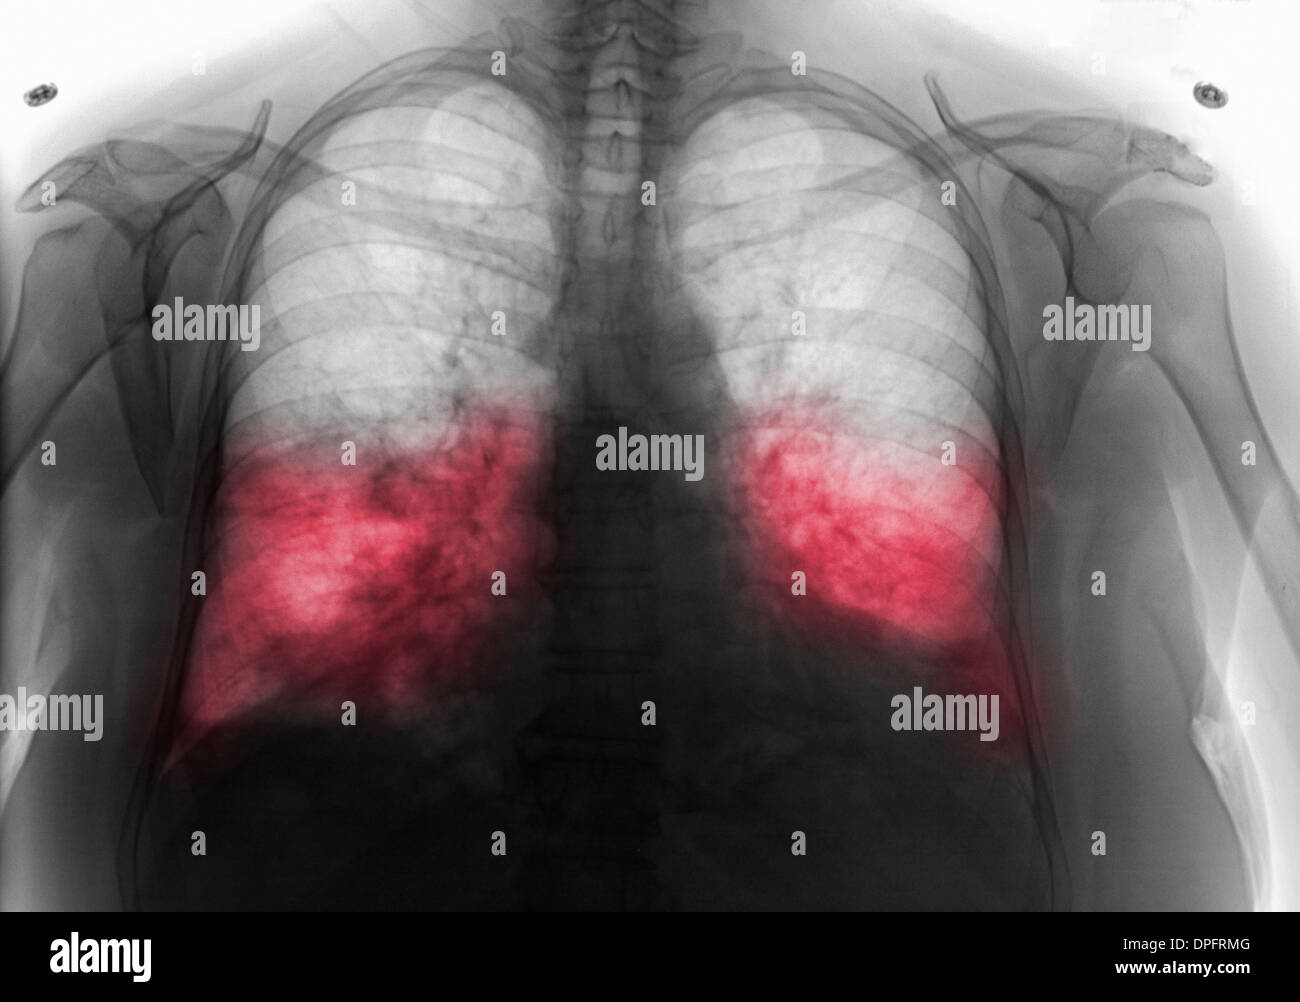 chest x-ray showing bilateral pneumonia Stock Photo